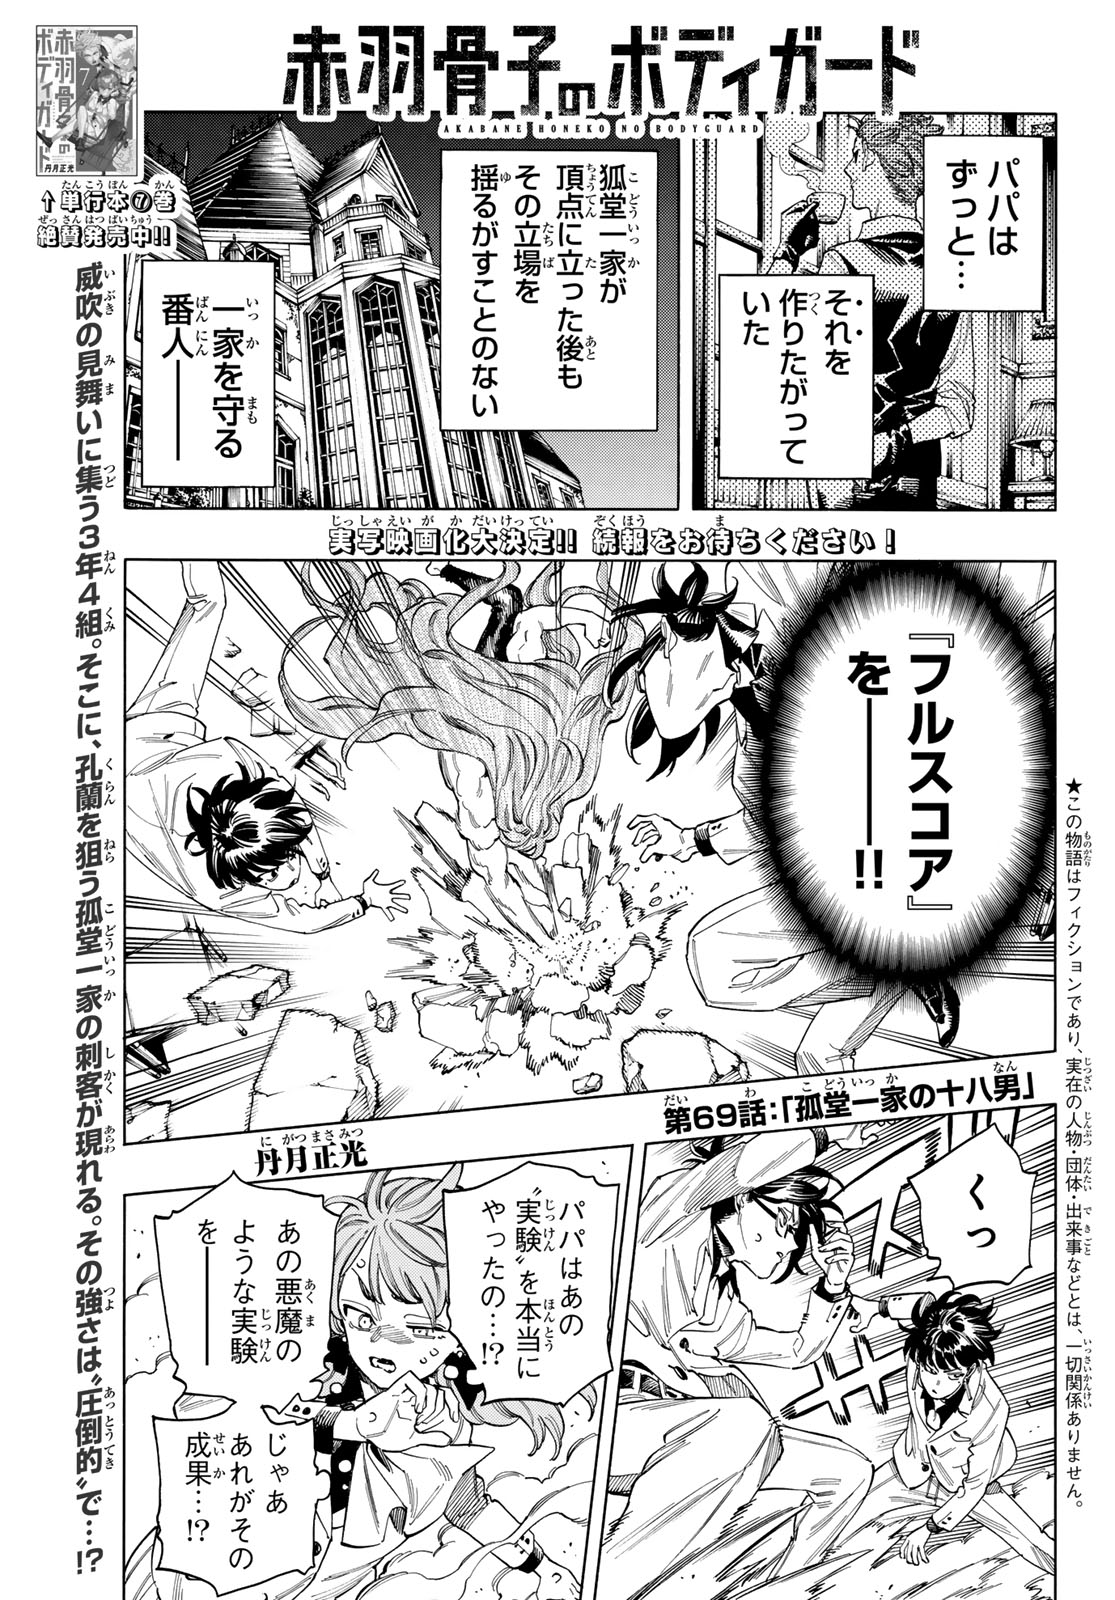 Akabane Honeko no Bodyguard - Chapter 69 - Page 1